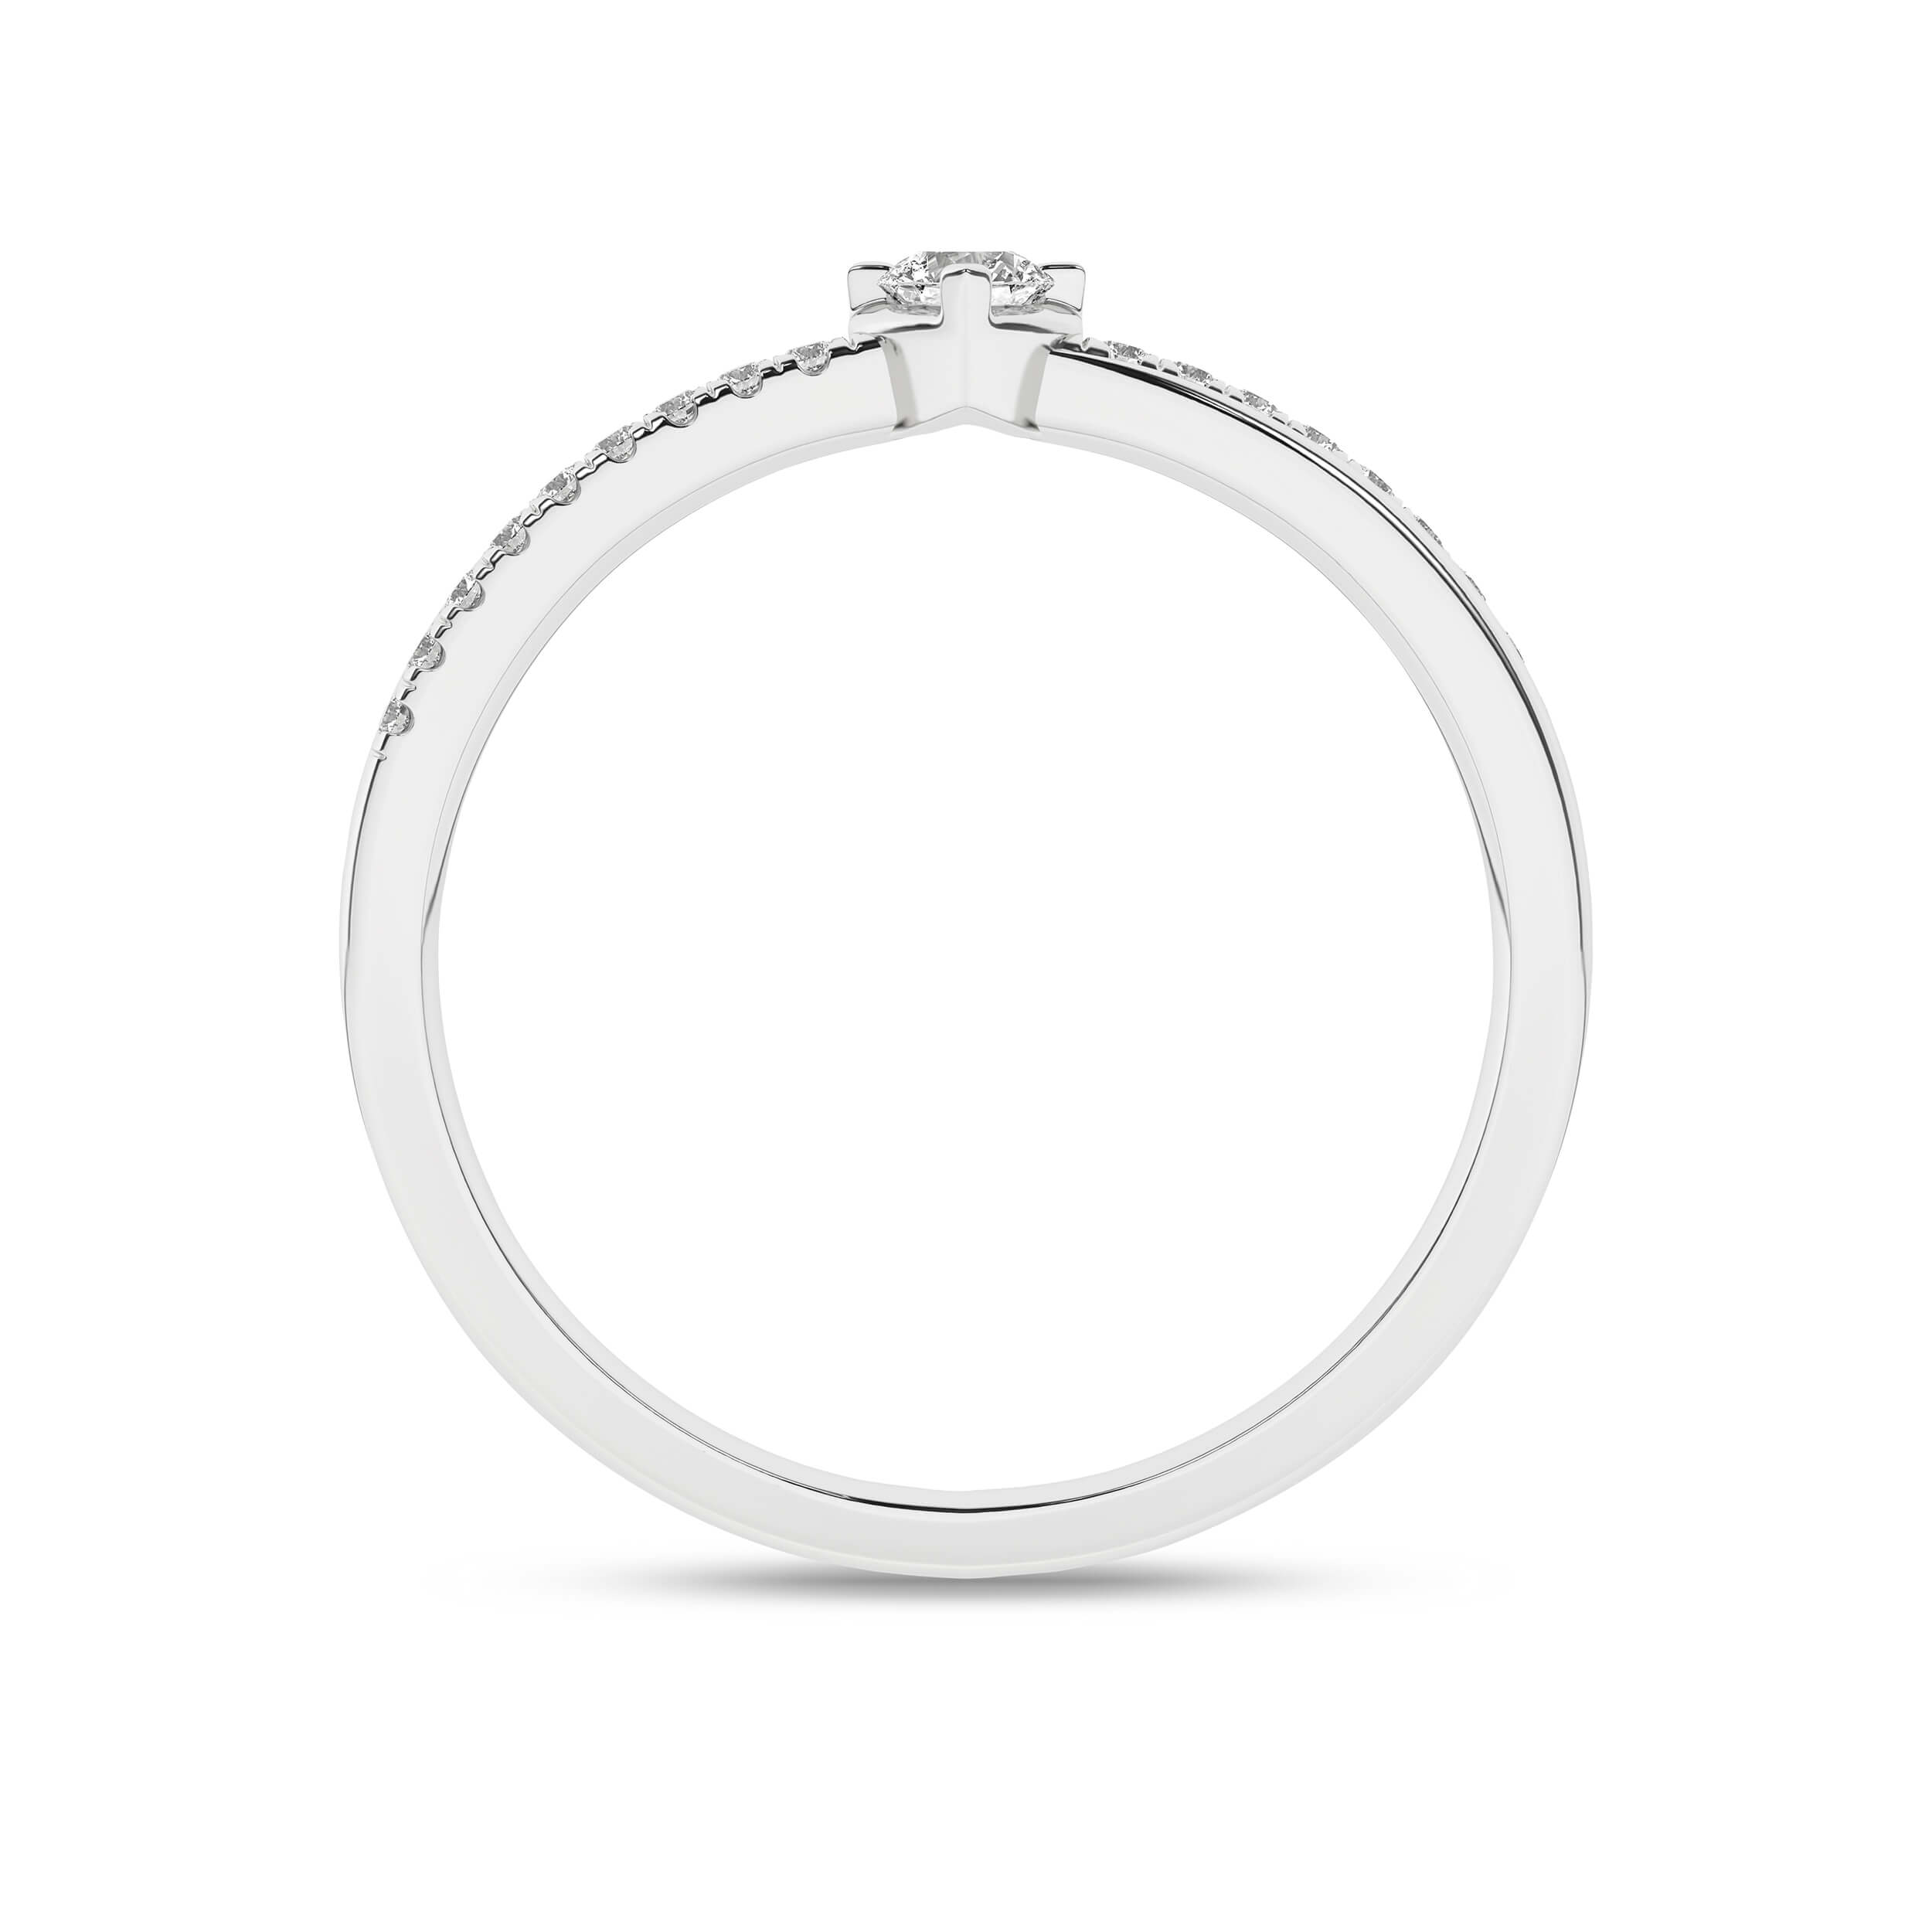 Inel de logodna din Aur Alb 14K cu Diamante 0.19Ct, articol RA4649, previzualizare foto 3